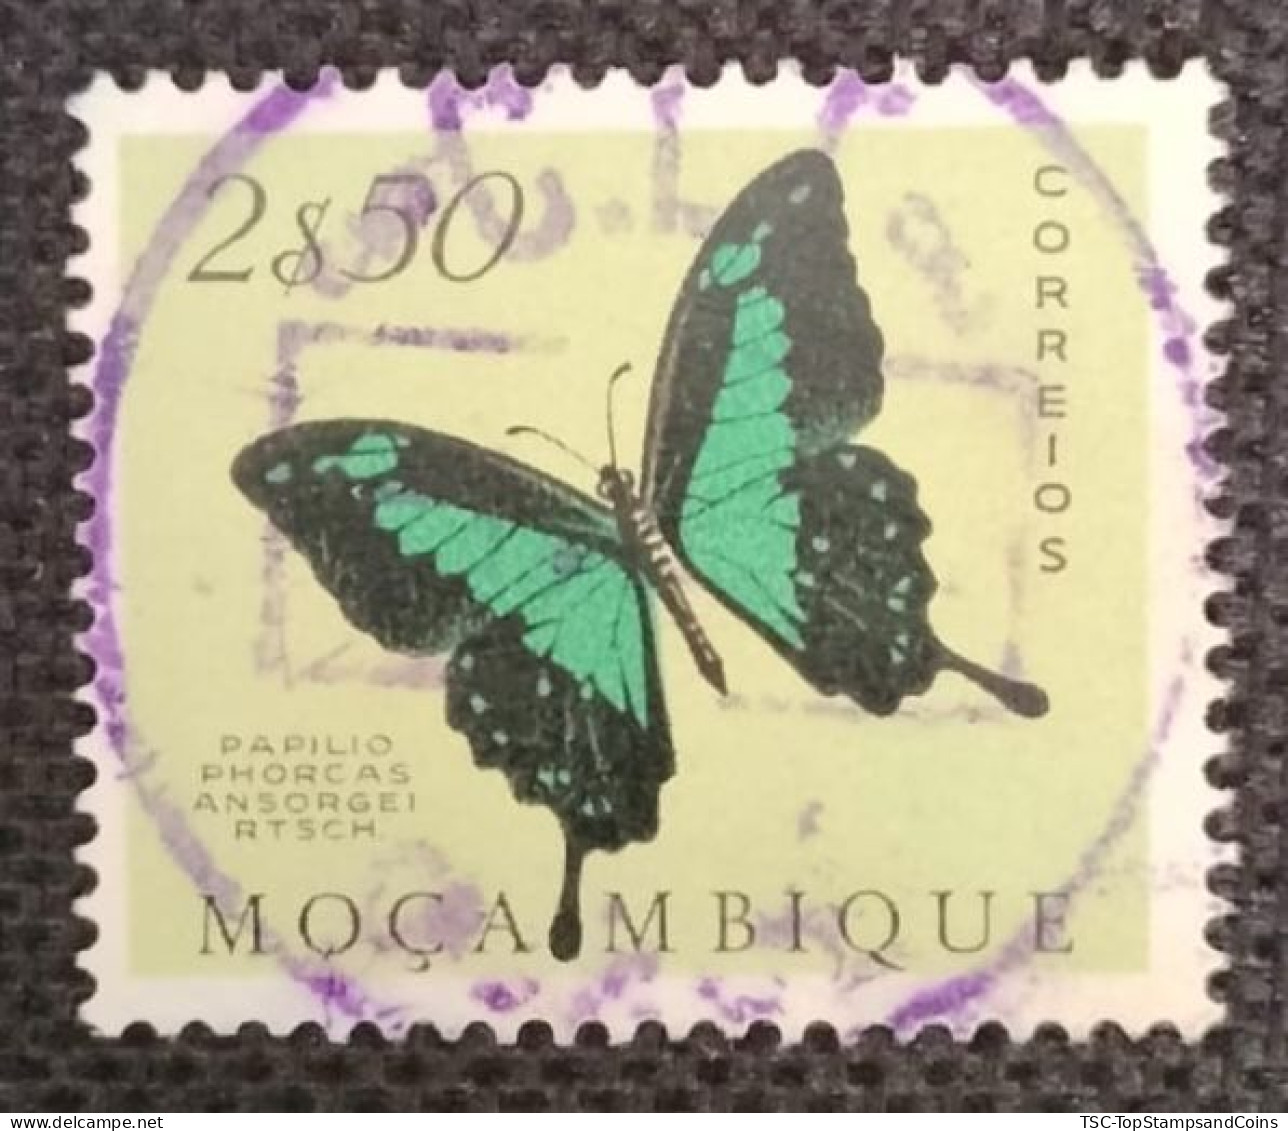 MOZPO0399U9 - Mozambique Butterflies  - 2$50 Used Stamp - Mozambique - 1953 - Mozambique